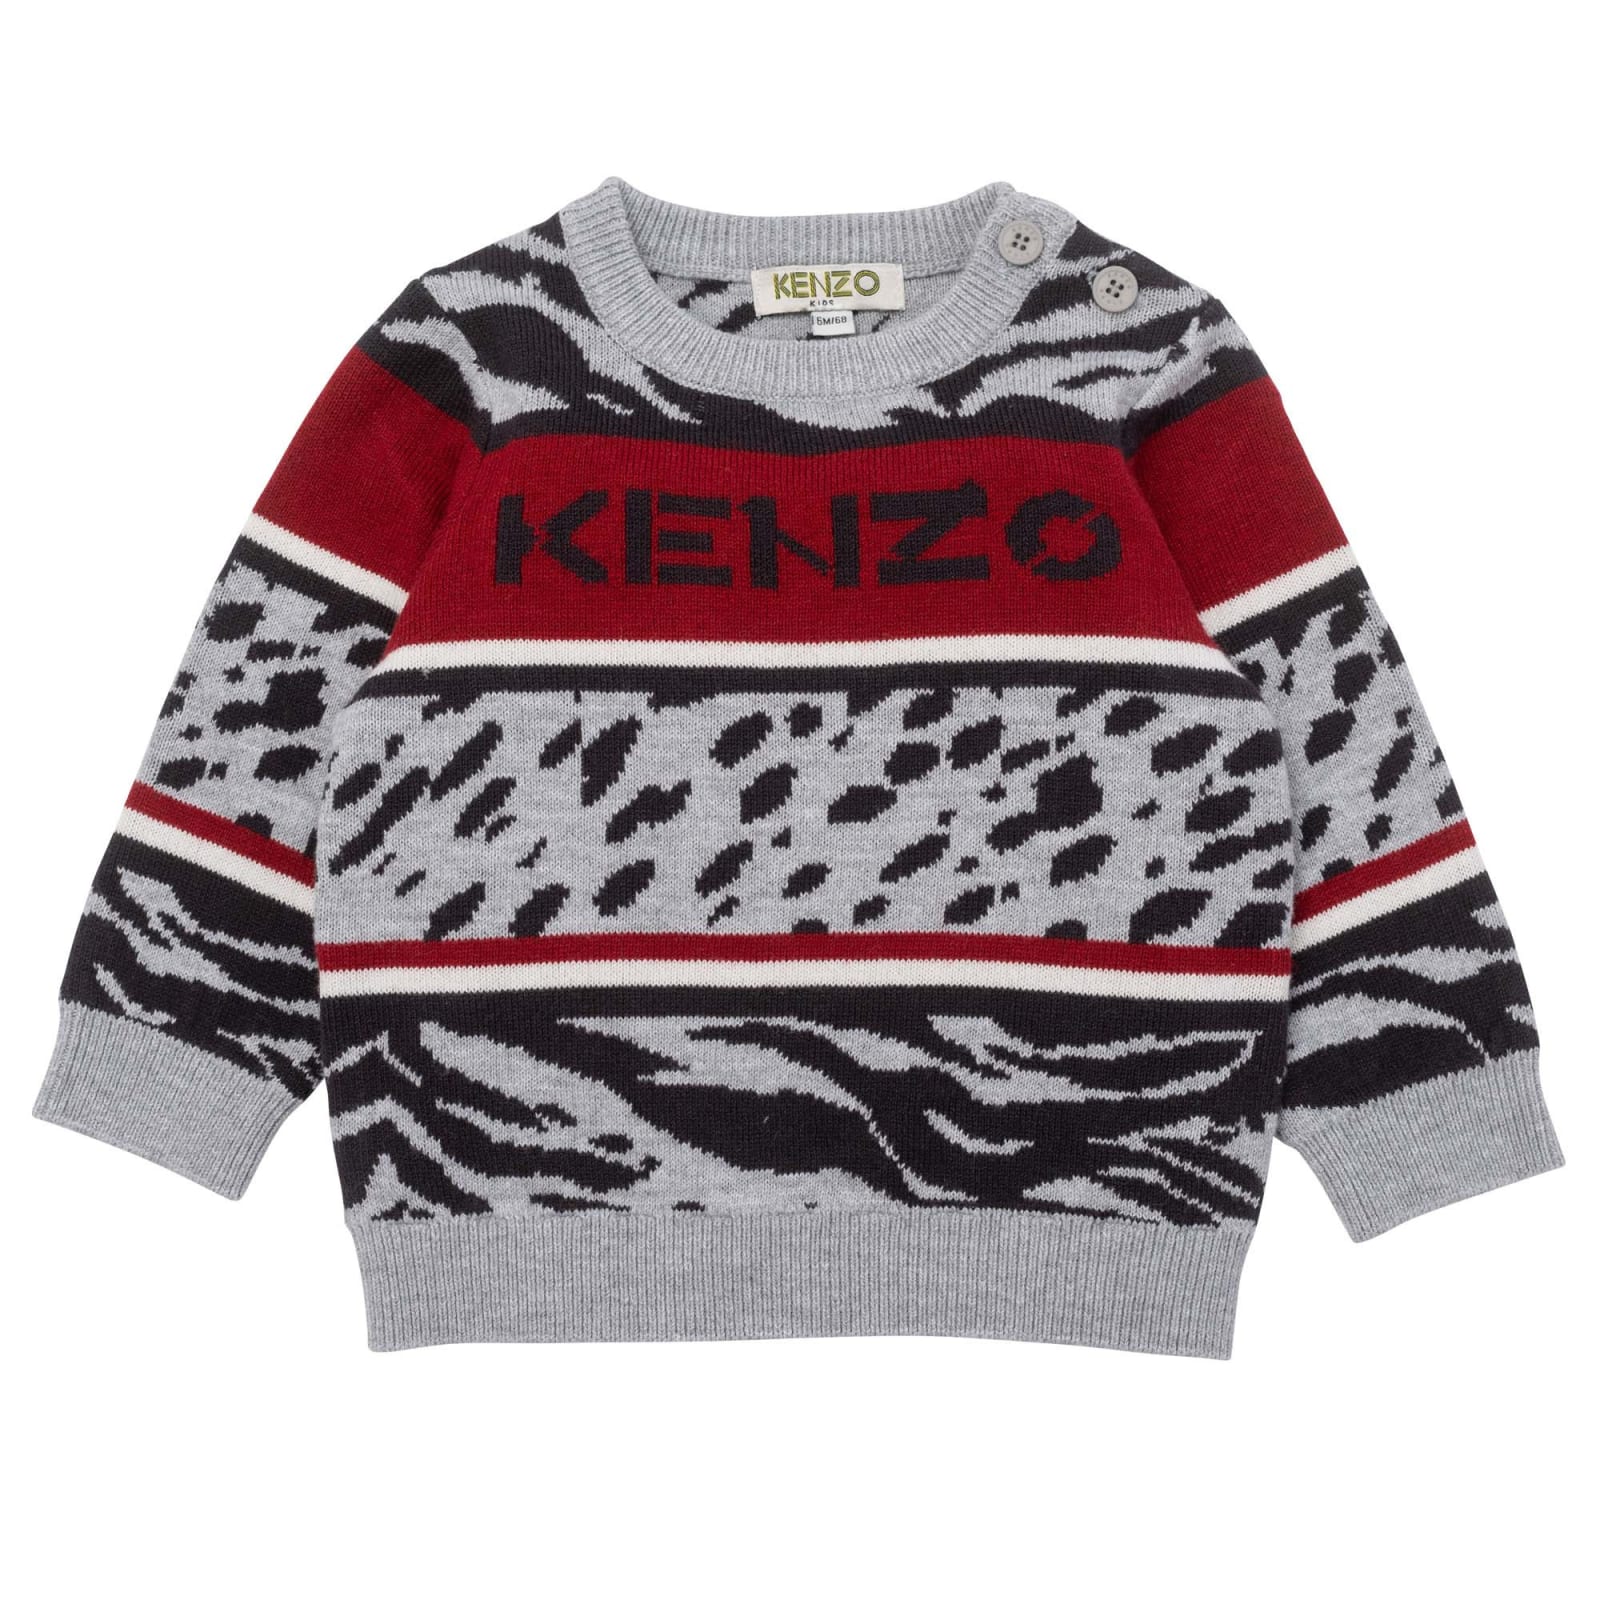 Kenzo Kids Sweater With Print